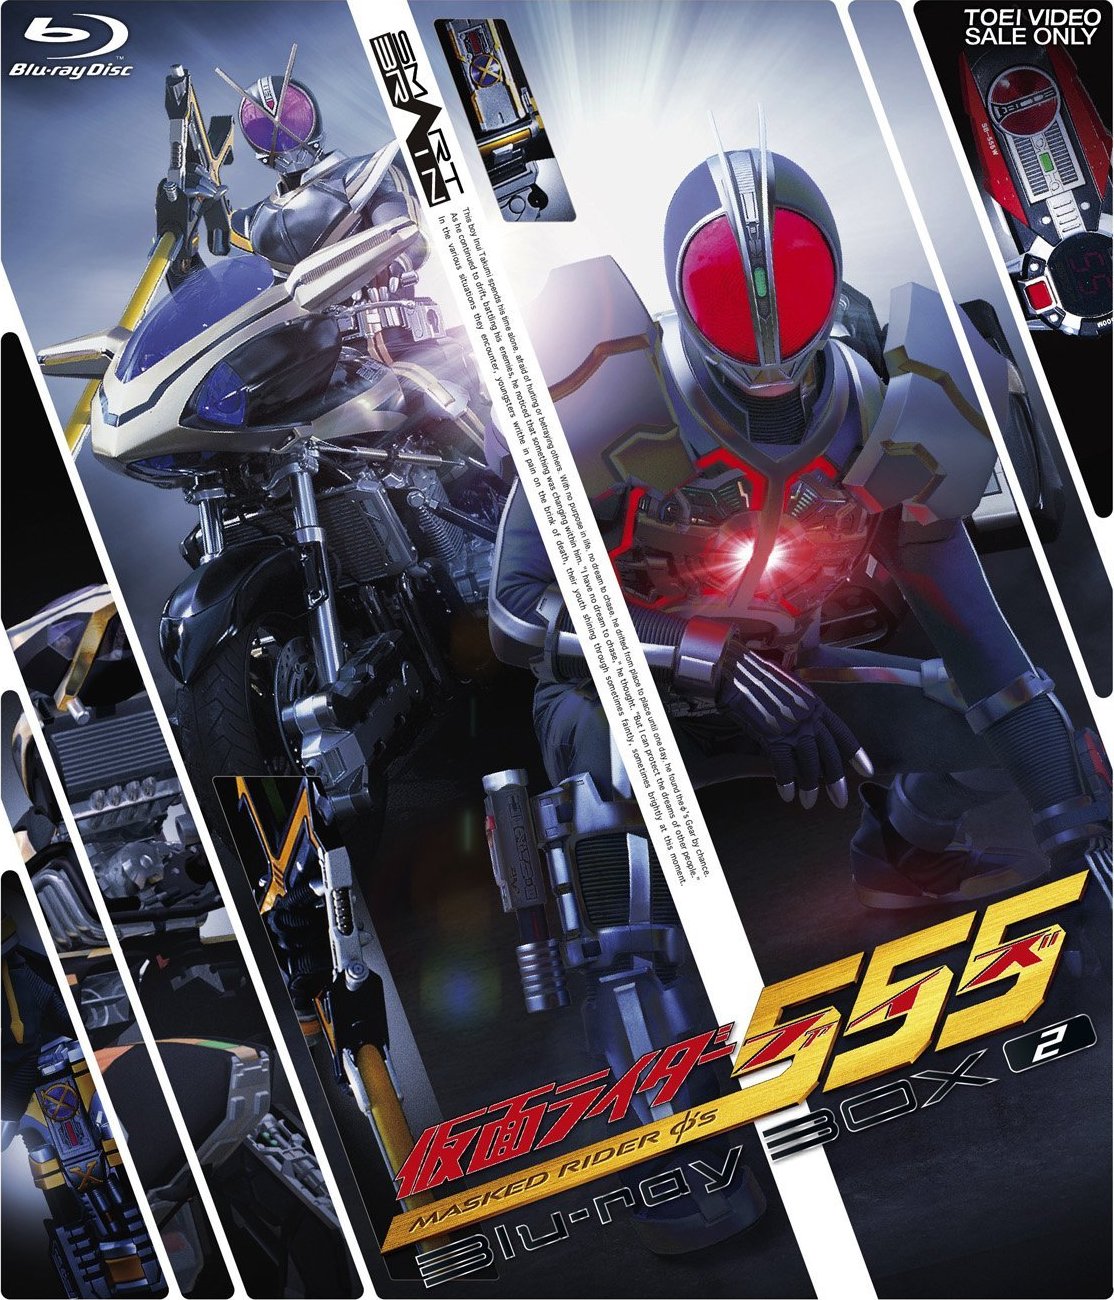 Kamen Rider 555 Blu-ray BOX 2 Blu-ray (Japan)